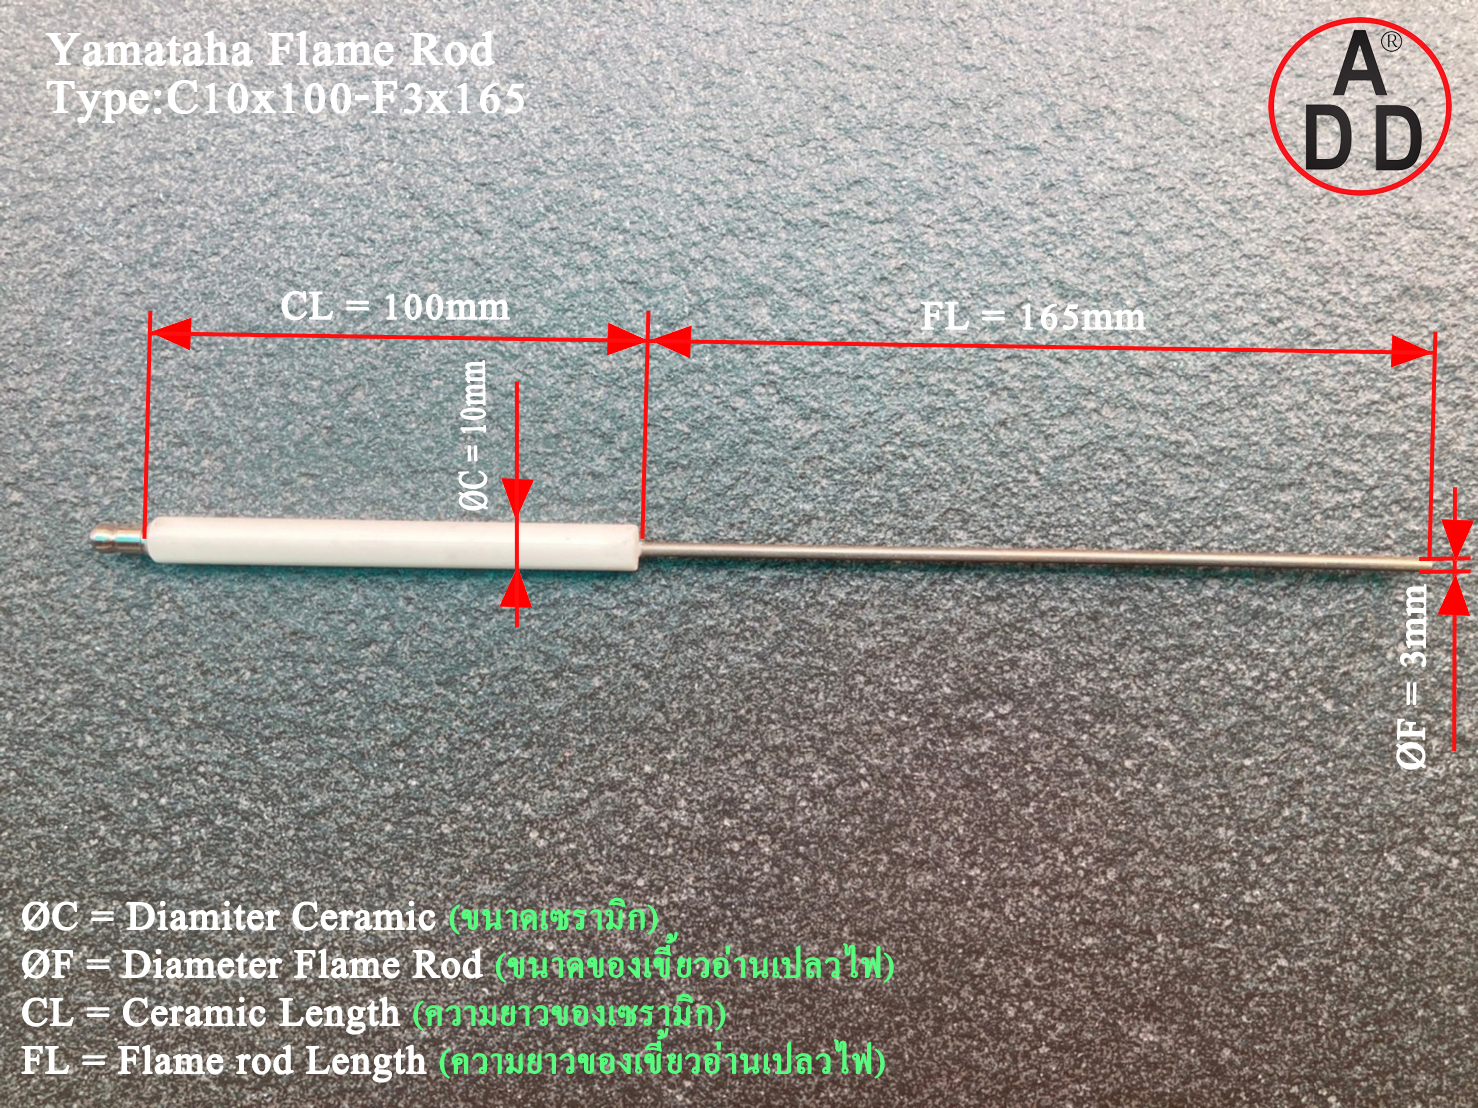 C10x100-F3x165 Yamataha Flame Rod